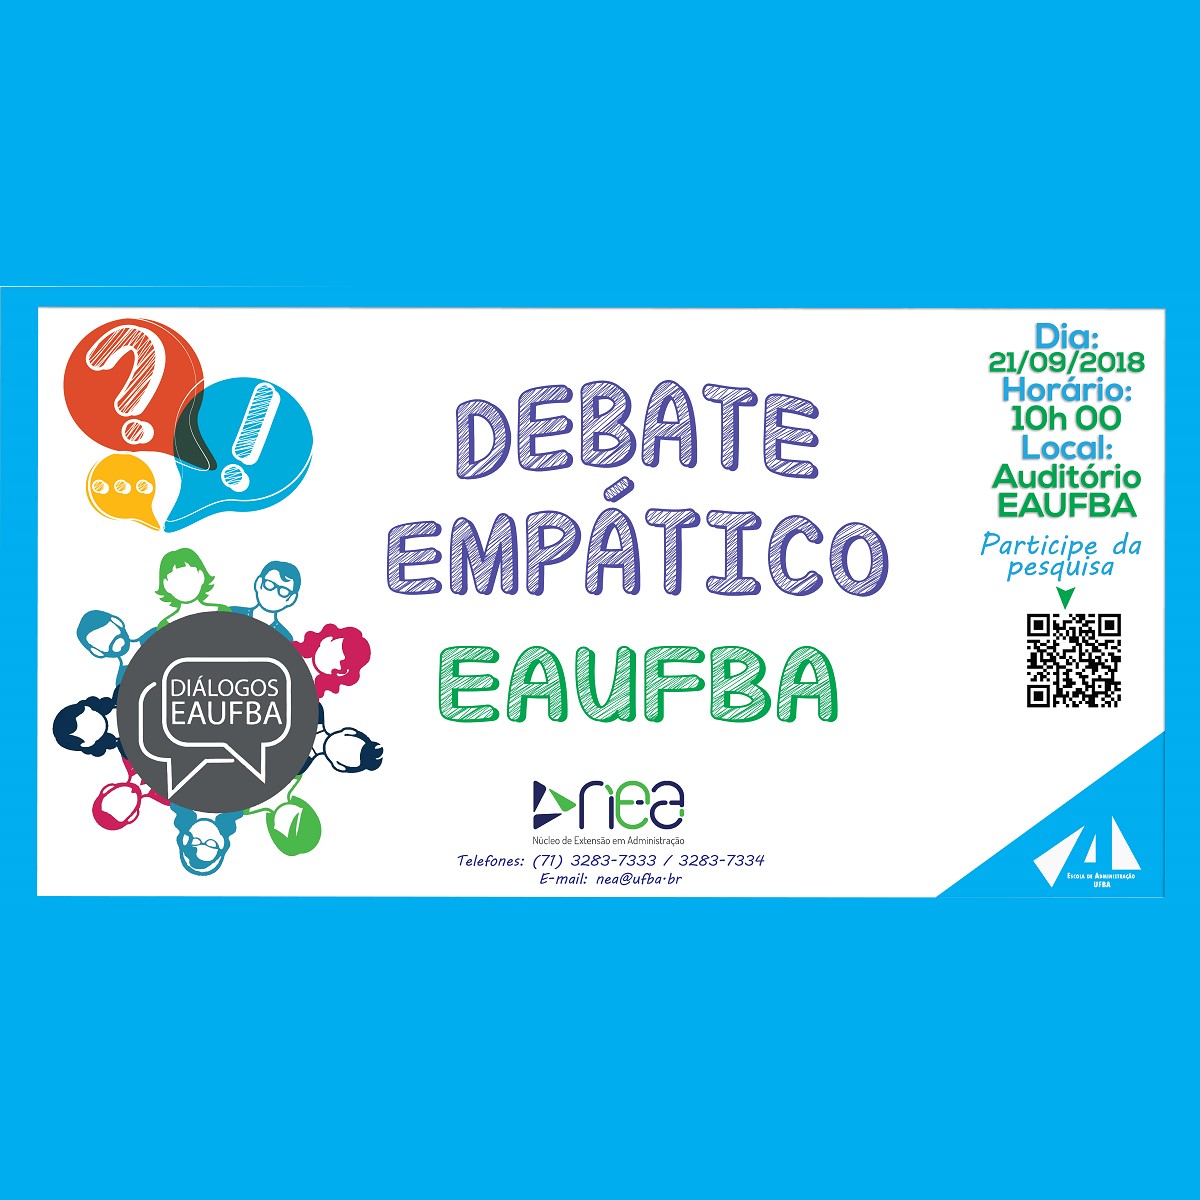 Diálogos EAUFBA promove “Debate Empático” para refletir sobre pontos de vista diferentes